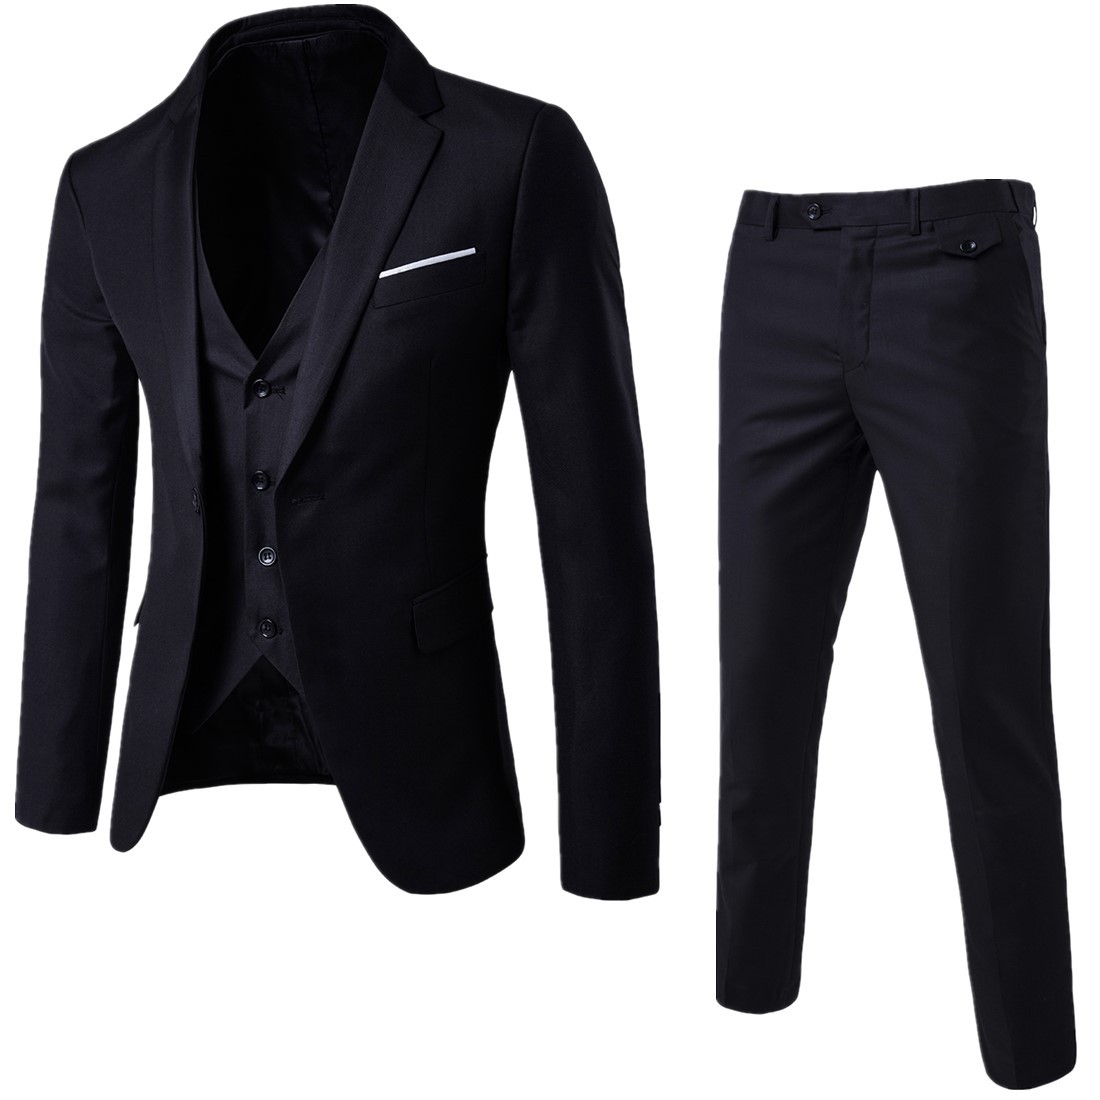 Casual suit, slim fit, Korean youth suit, one suit, men's formal coat, top, autumn trend, handsome